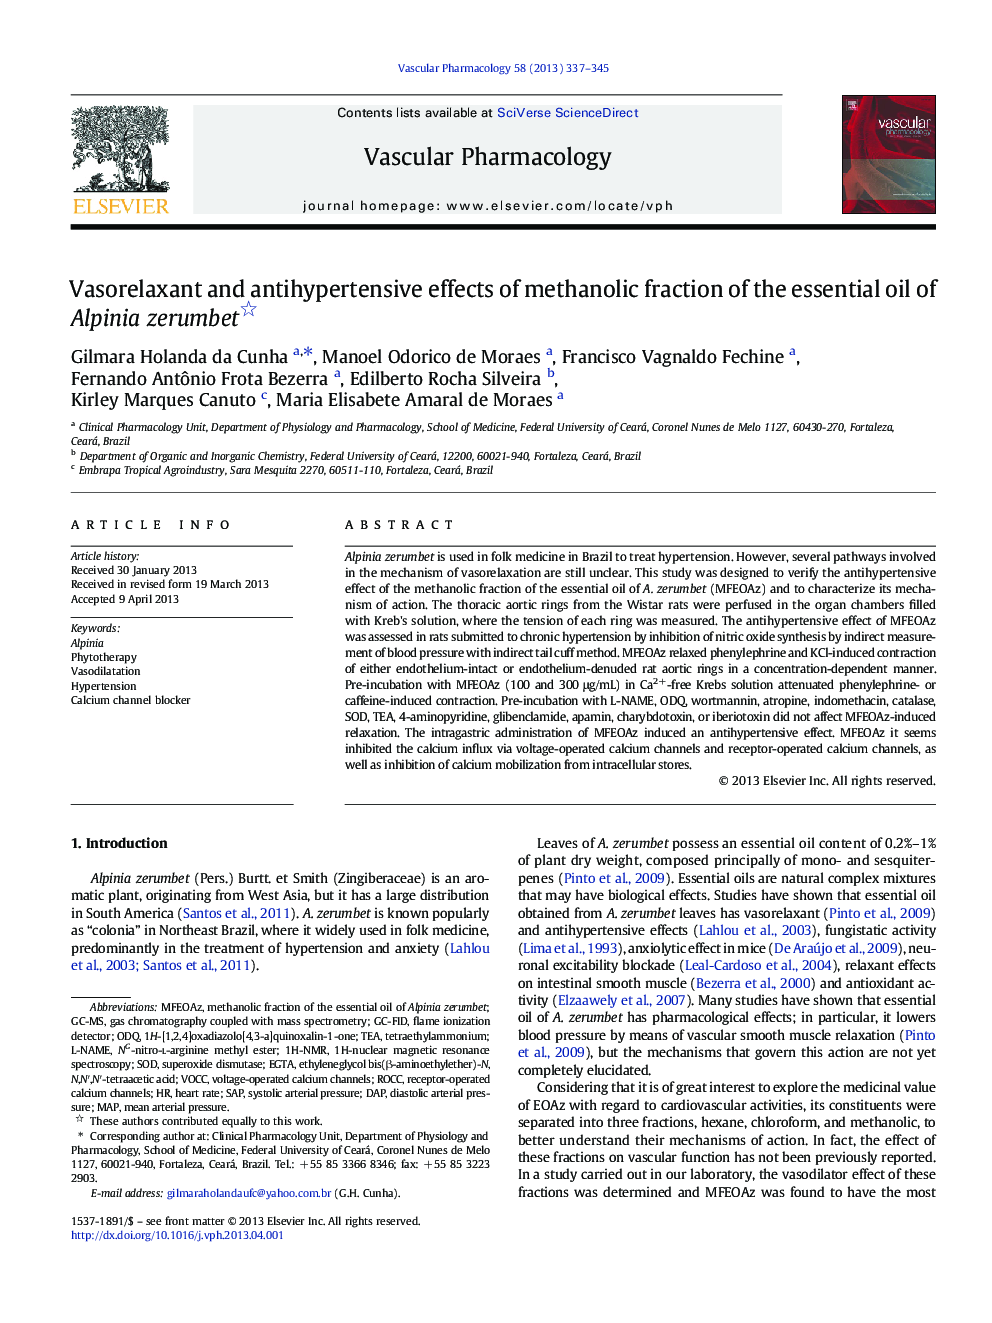 Vasorelaxant and antihypertensive effects of methanolic fraction of the essential oil of Alpinia zerumbet 